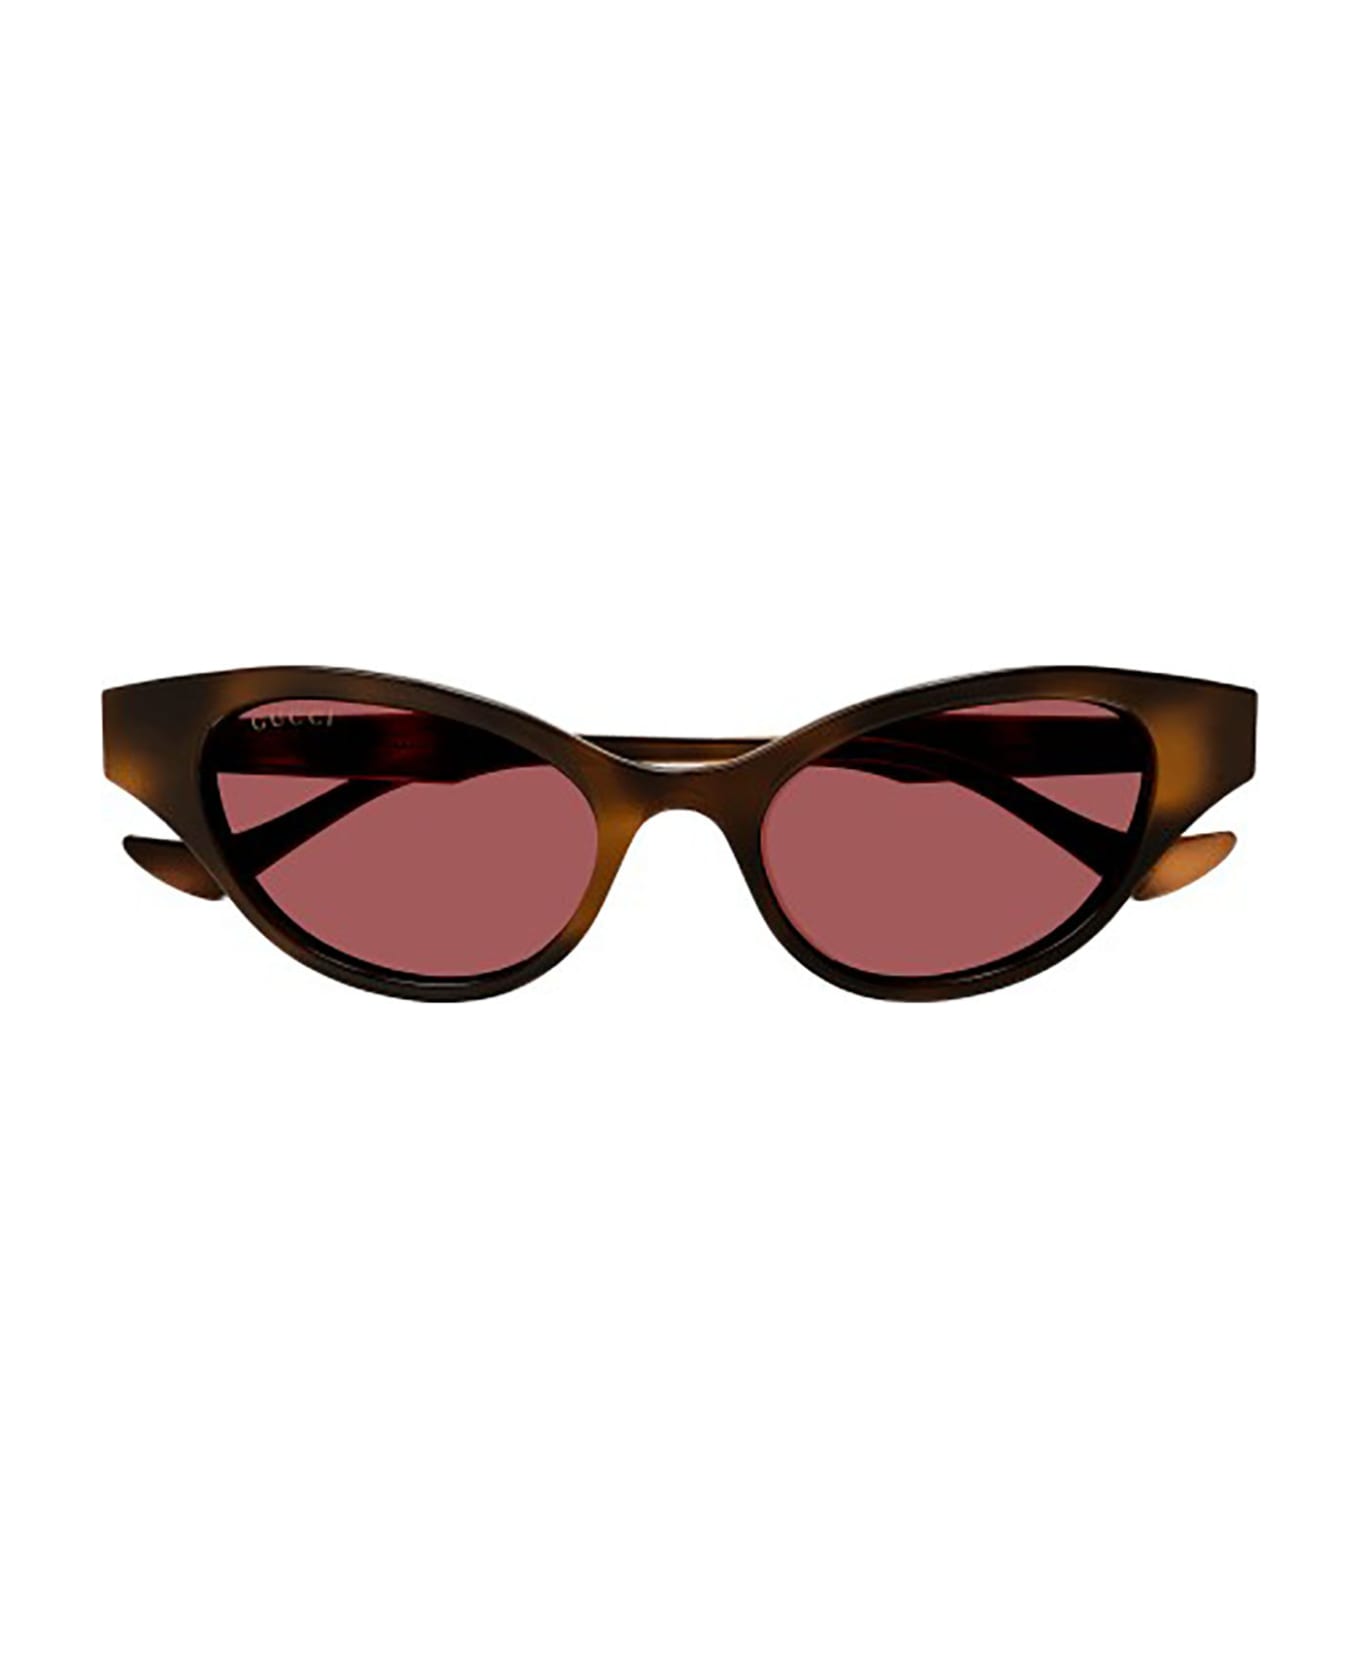 Gucci Eyewear Gg1298s Sunglasses - HAVANA-HAVANA-BROWN